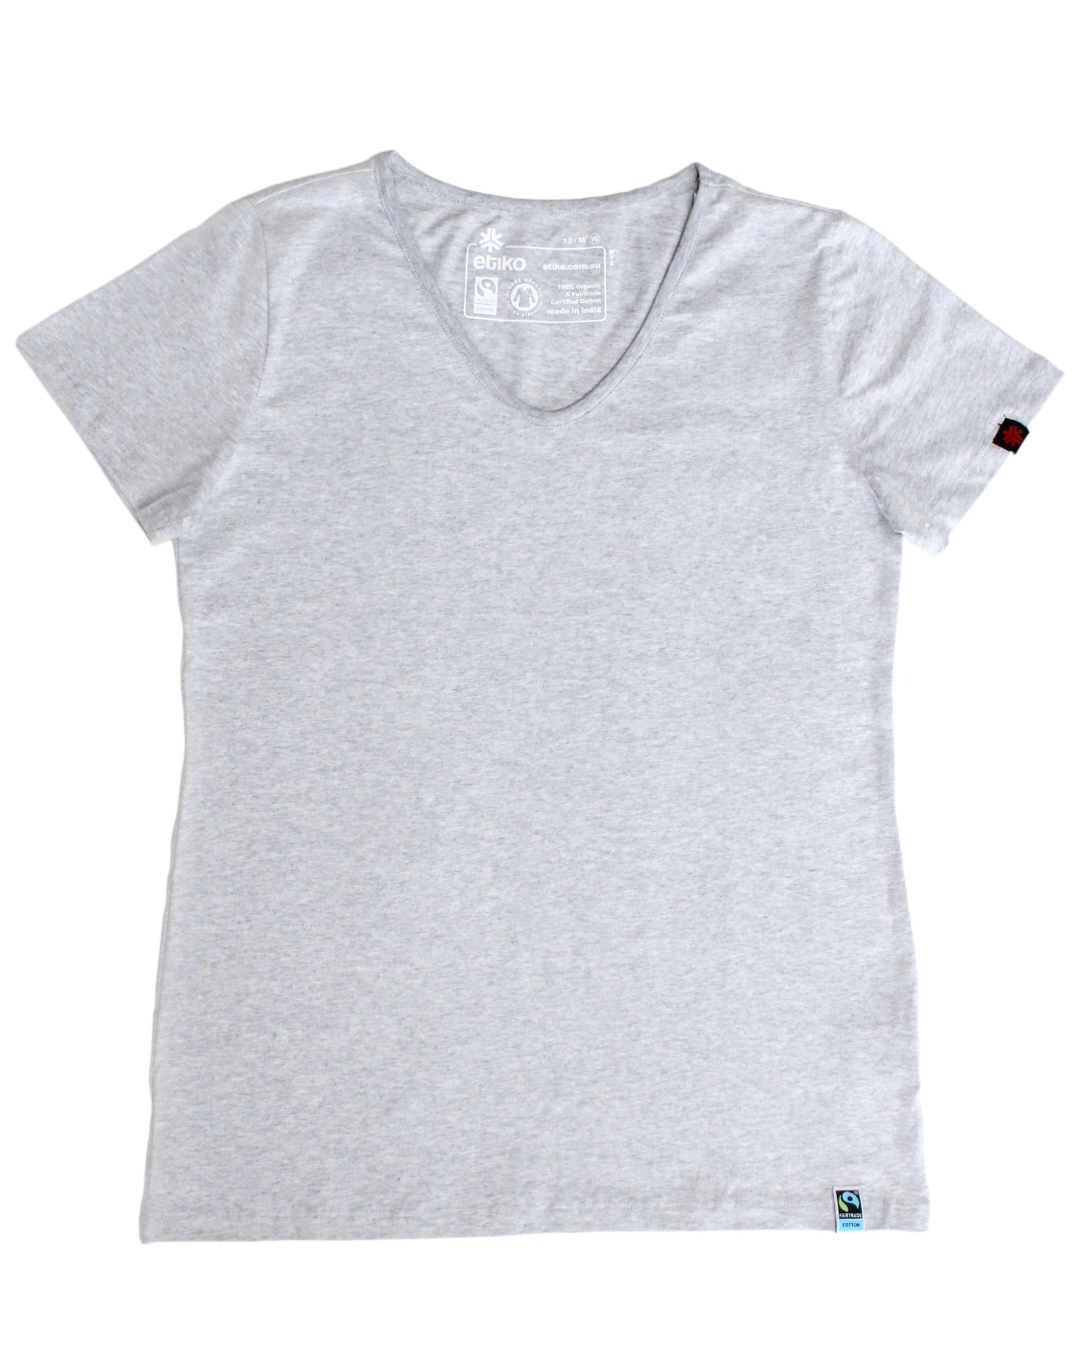 Etiko Fairtrade Certified Organic Cotton Grey Marle Womens V-Neck T-Shirt Bundle,  Eco-Friendly